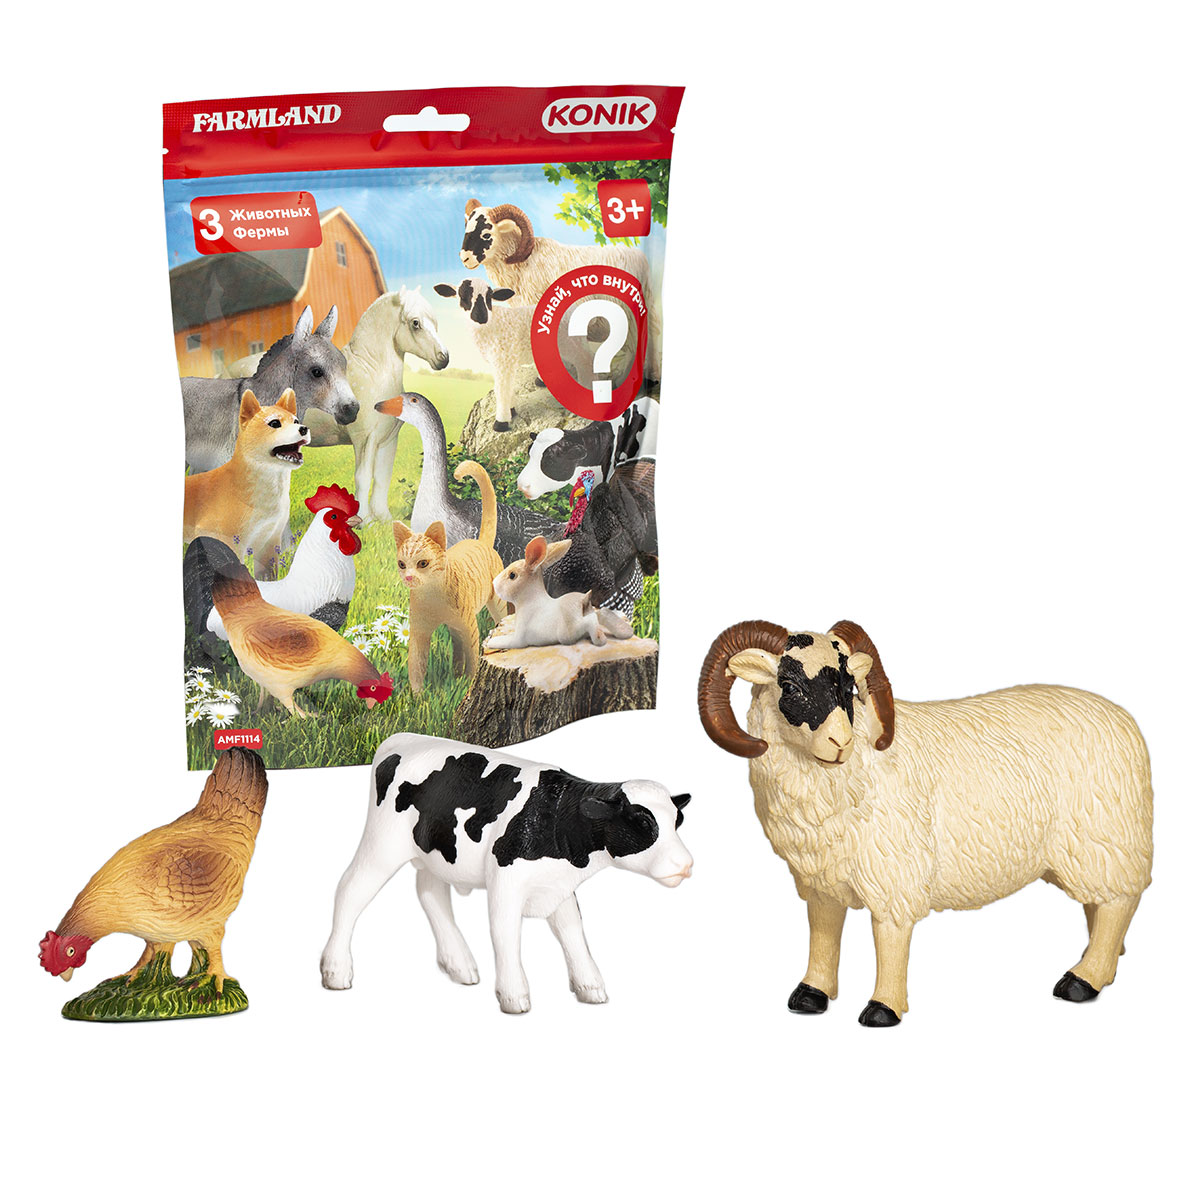 Пакетик-сюрприз KONIK Животные фермы, 3 фигурки konik пакетик сюрприз животные фермы 3 фигурки